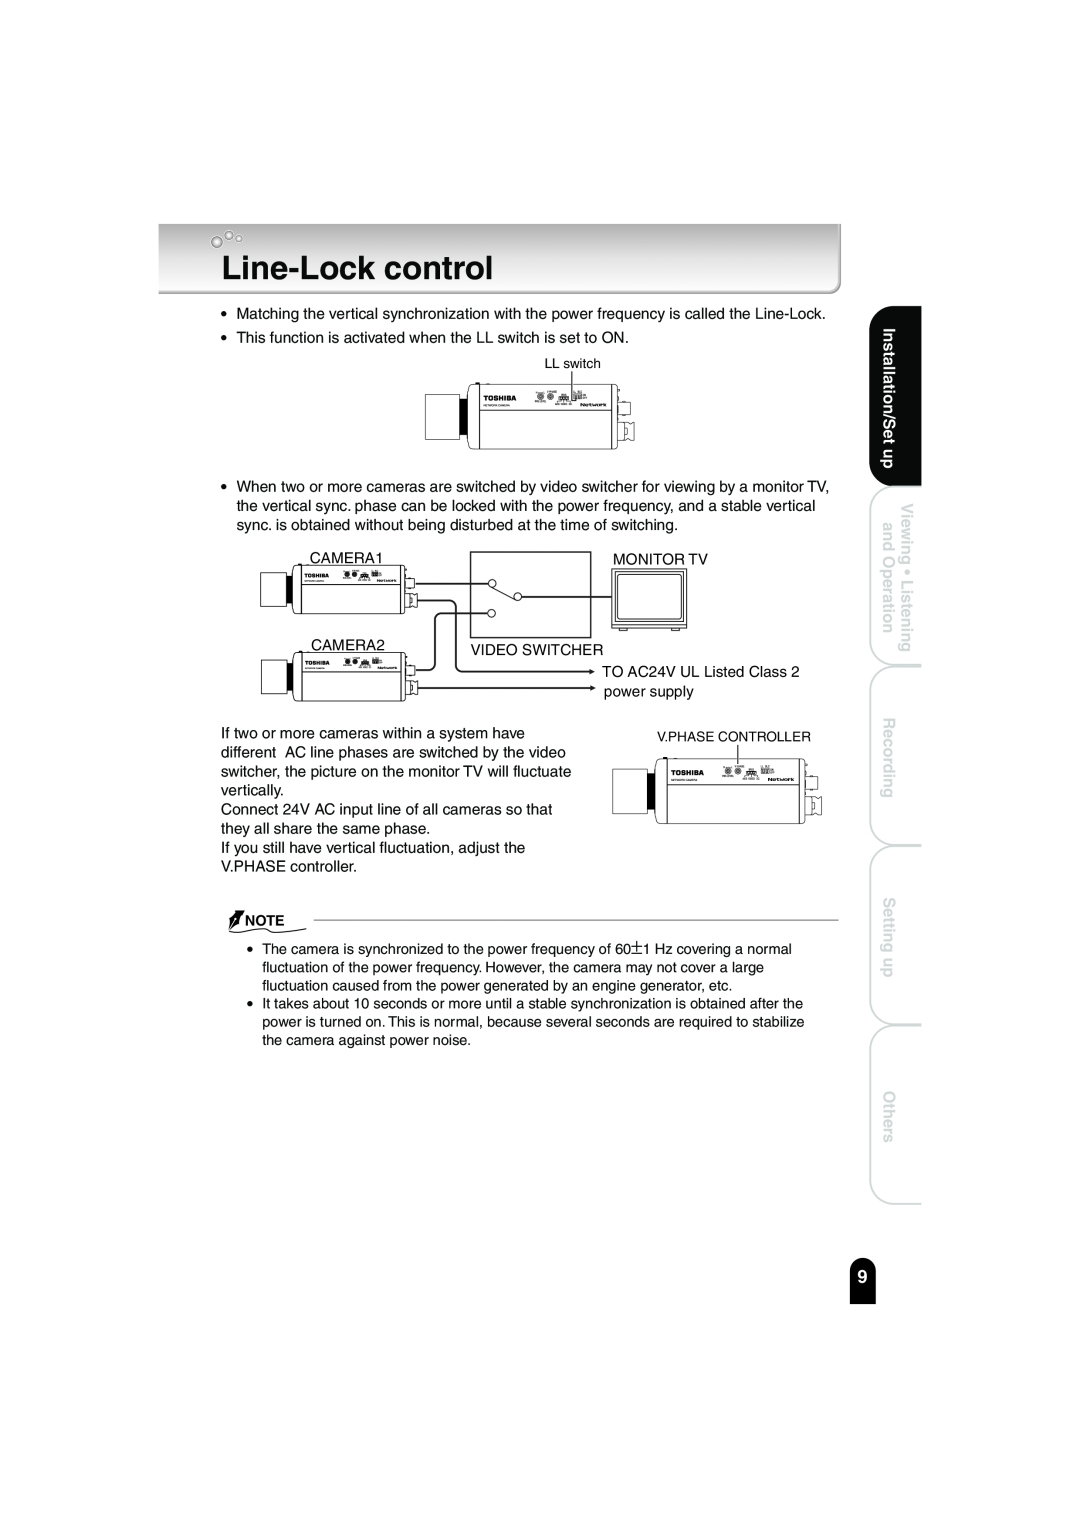 Toshiba IK-WB02A manual Line-Lockcontrol, Installation/Set up, Recording Setting up Others 